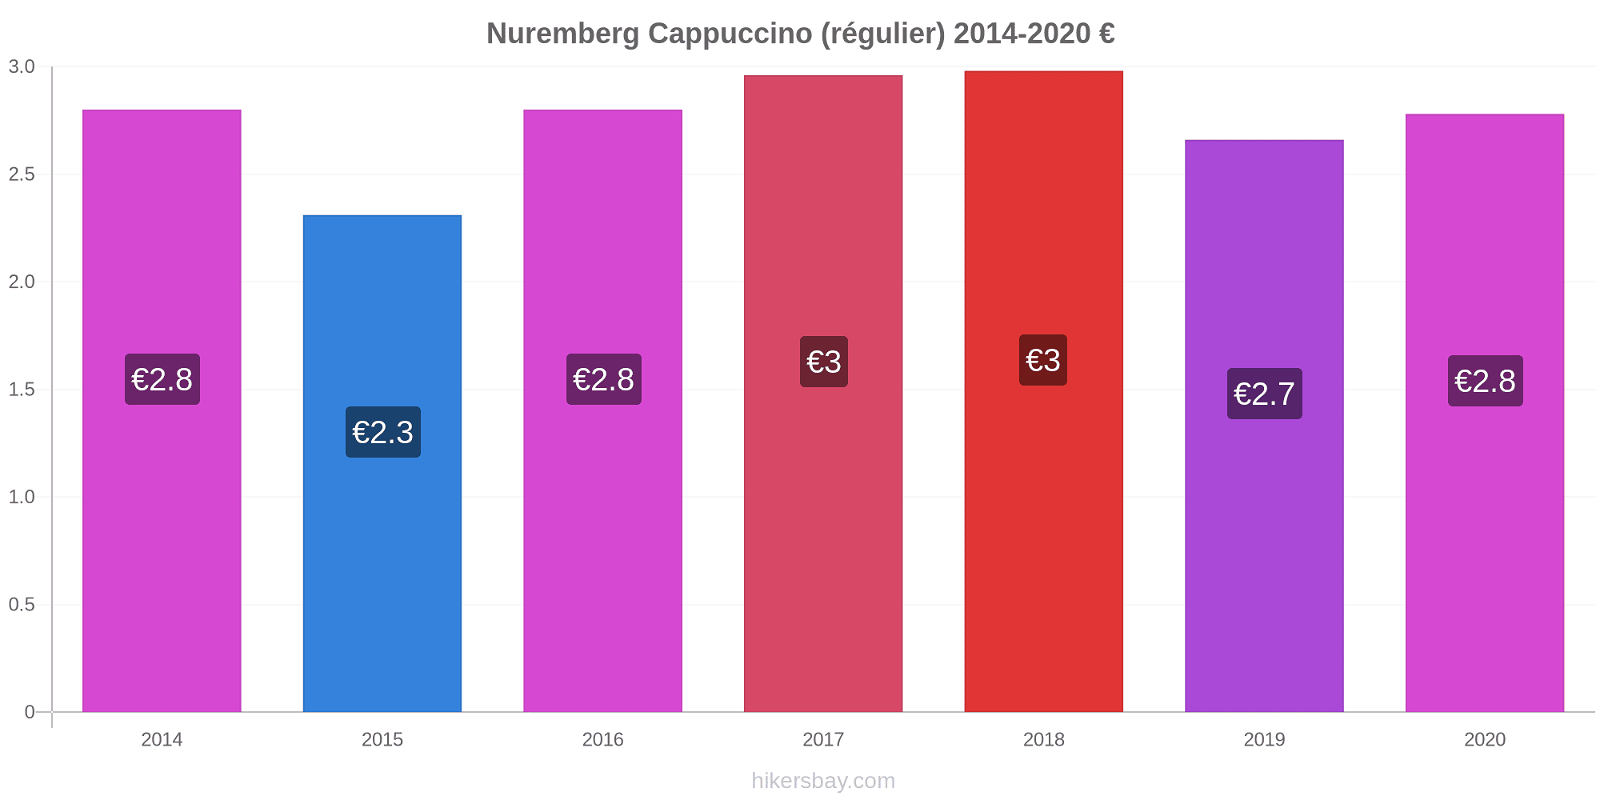 Nuremberg changements de prix Cappuccino (régulier) hikersbay.com